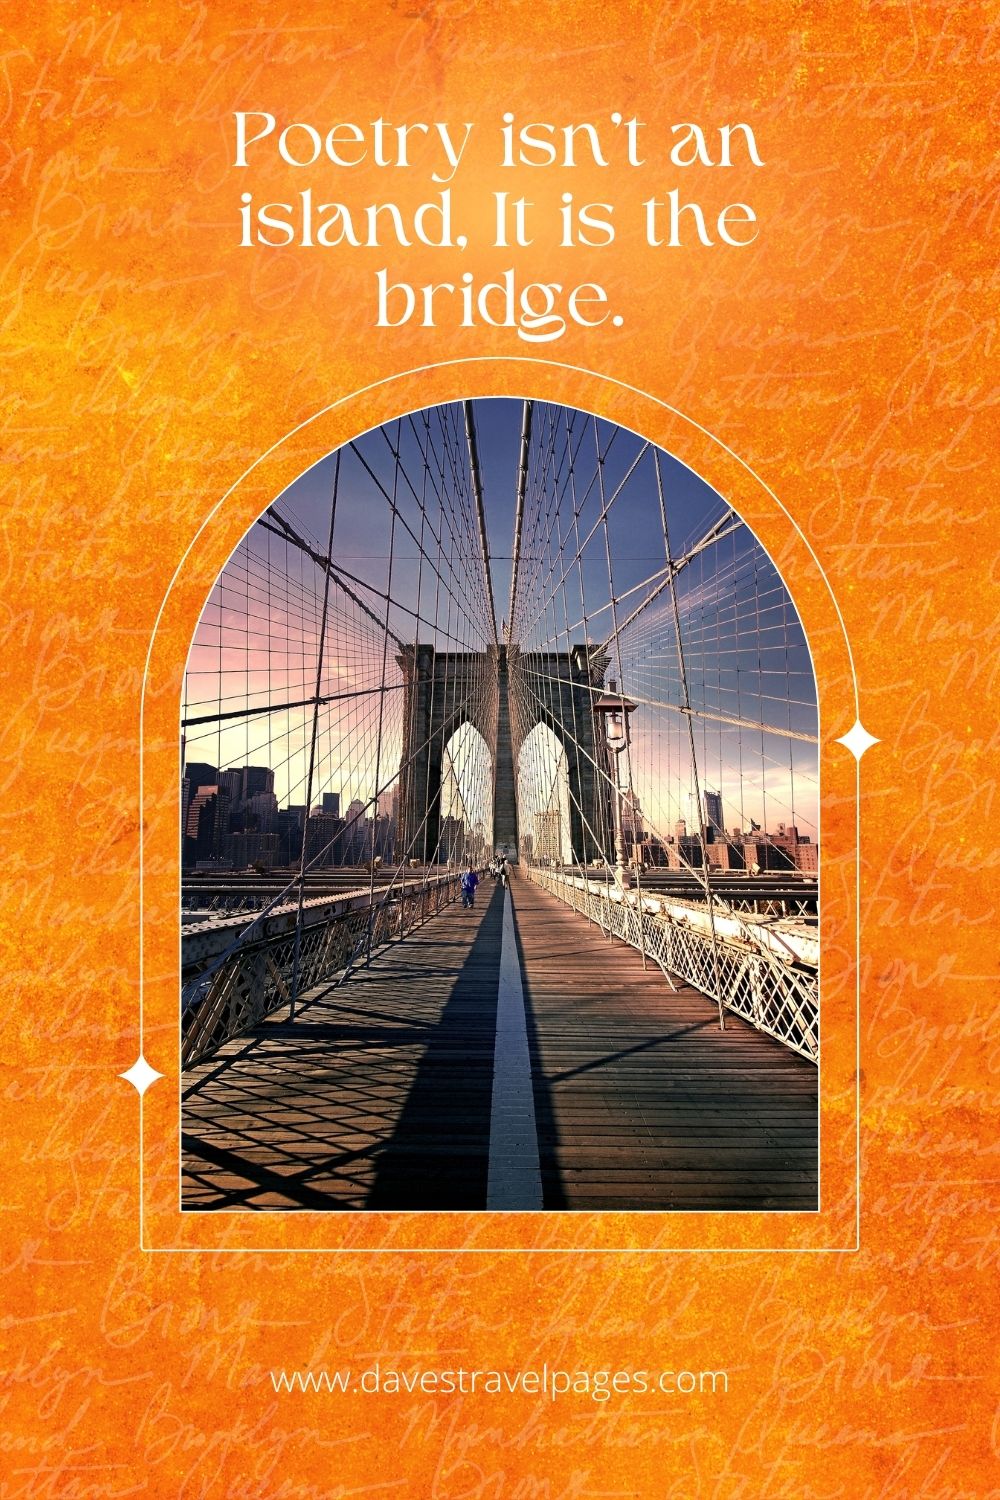 Poetry isn't an island. It is the bridge.